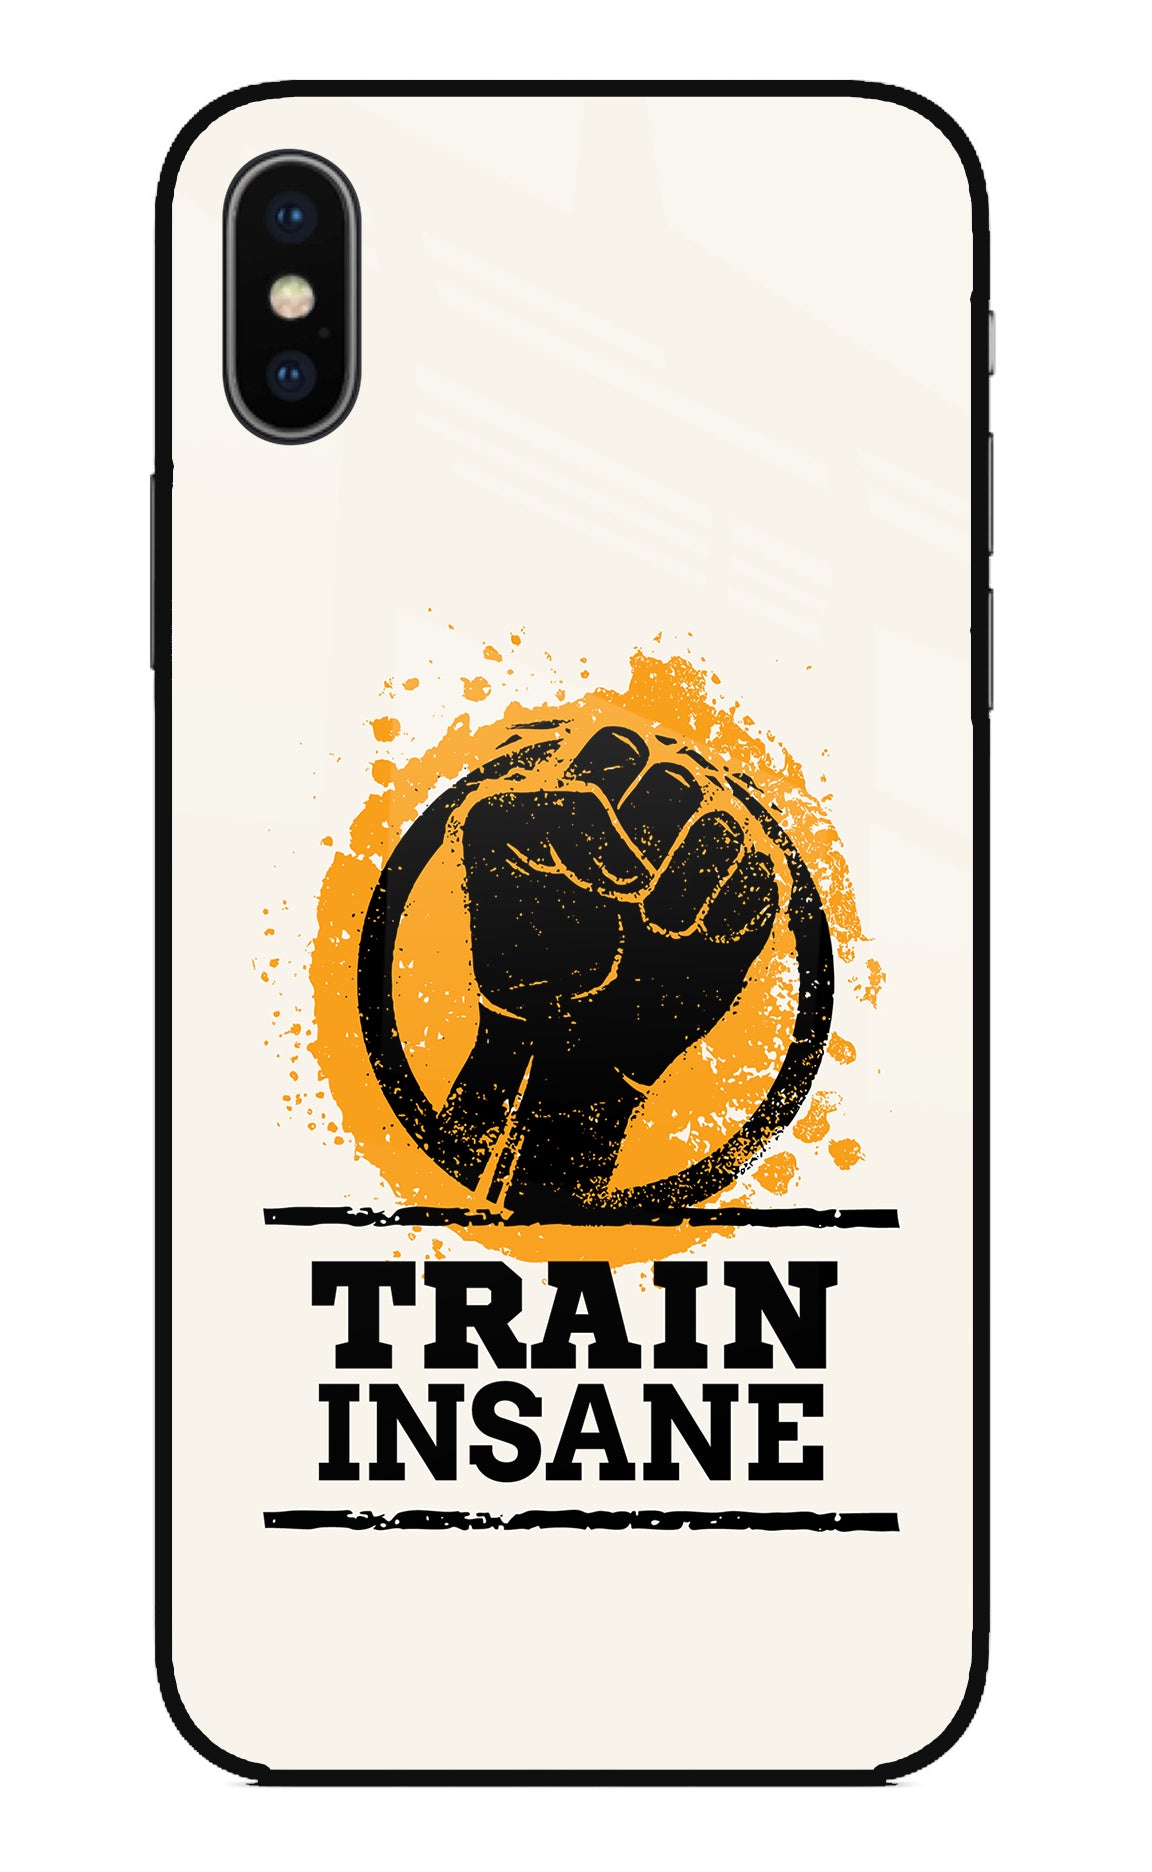 Train Insane iPhone X Back Cover